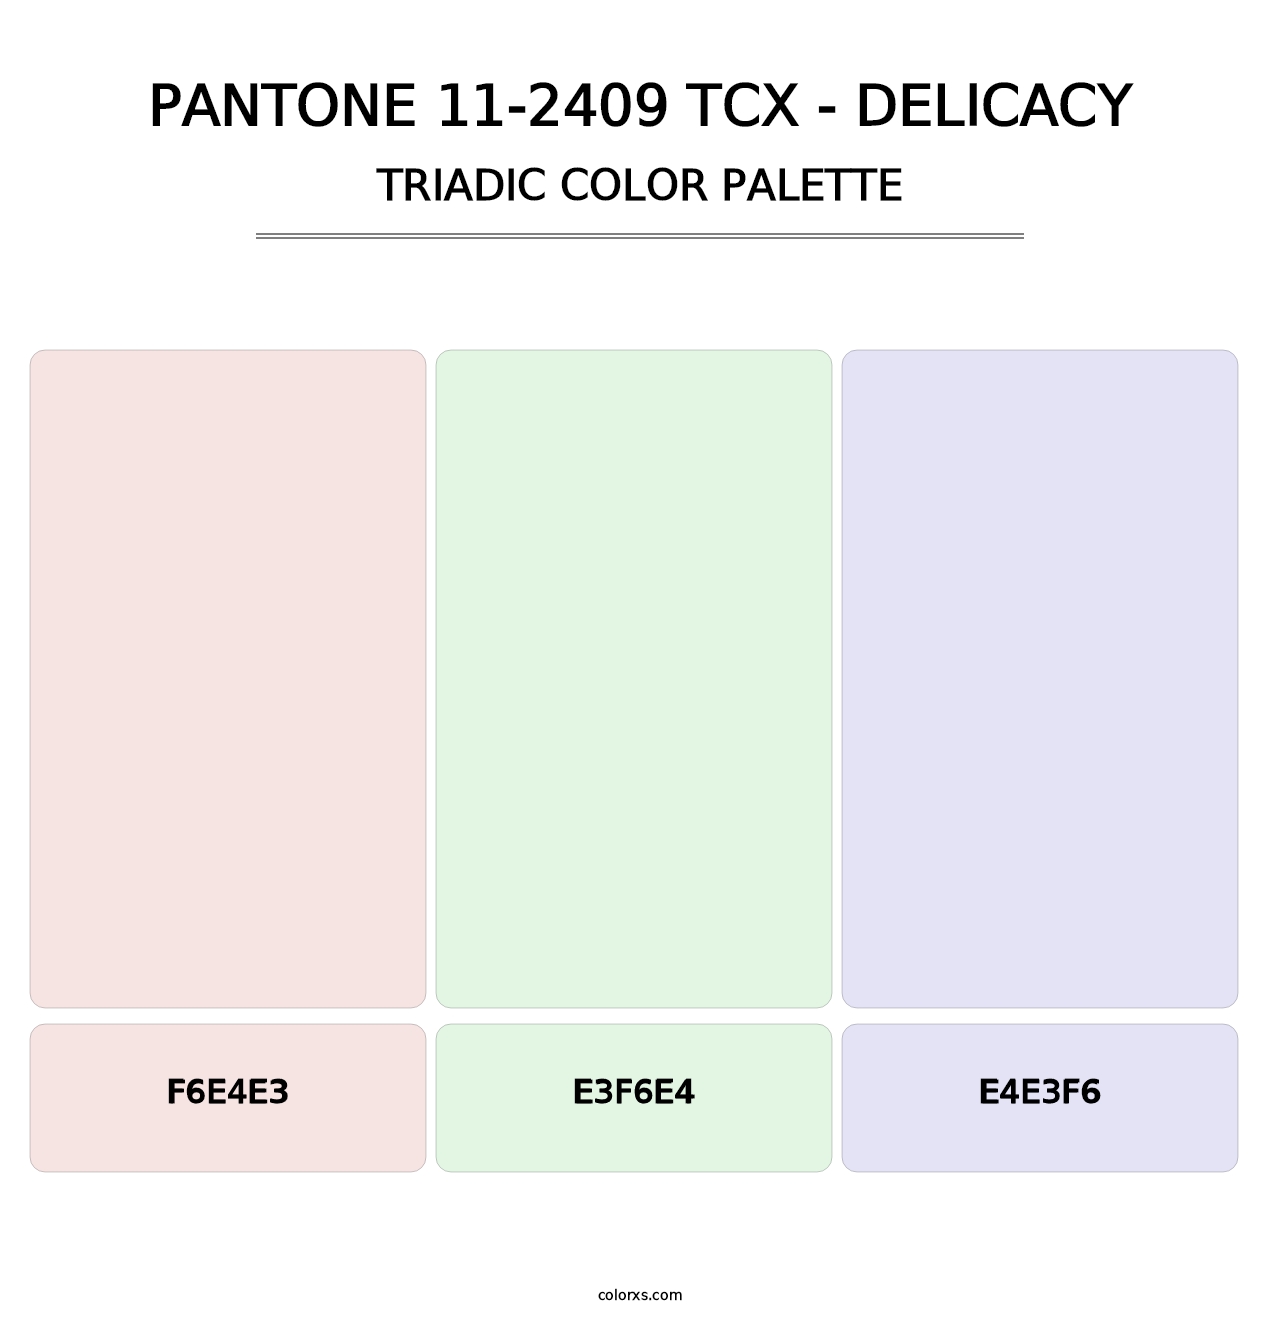 PANTONE 11-2409 TCX - Delicacy - Triadic Color Palette